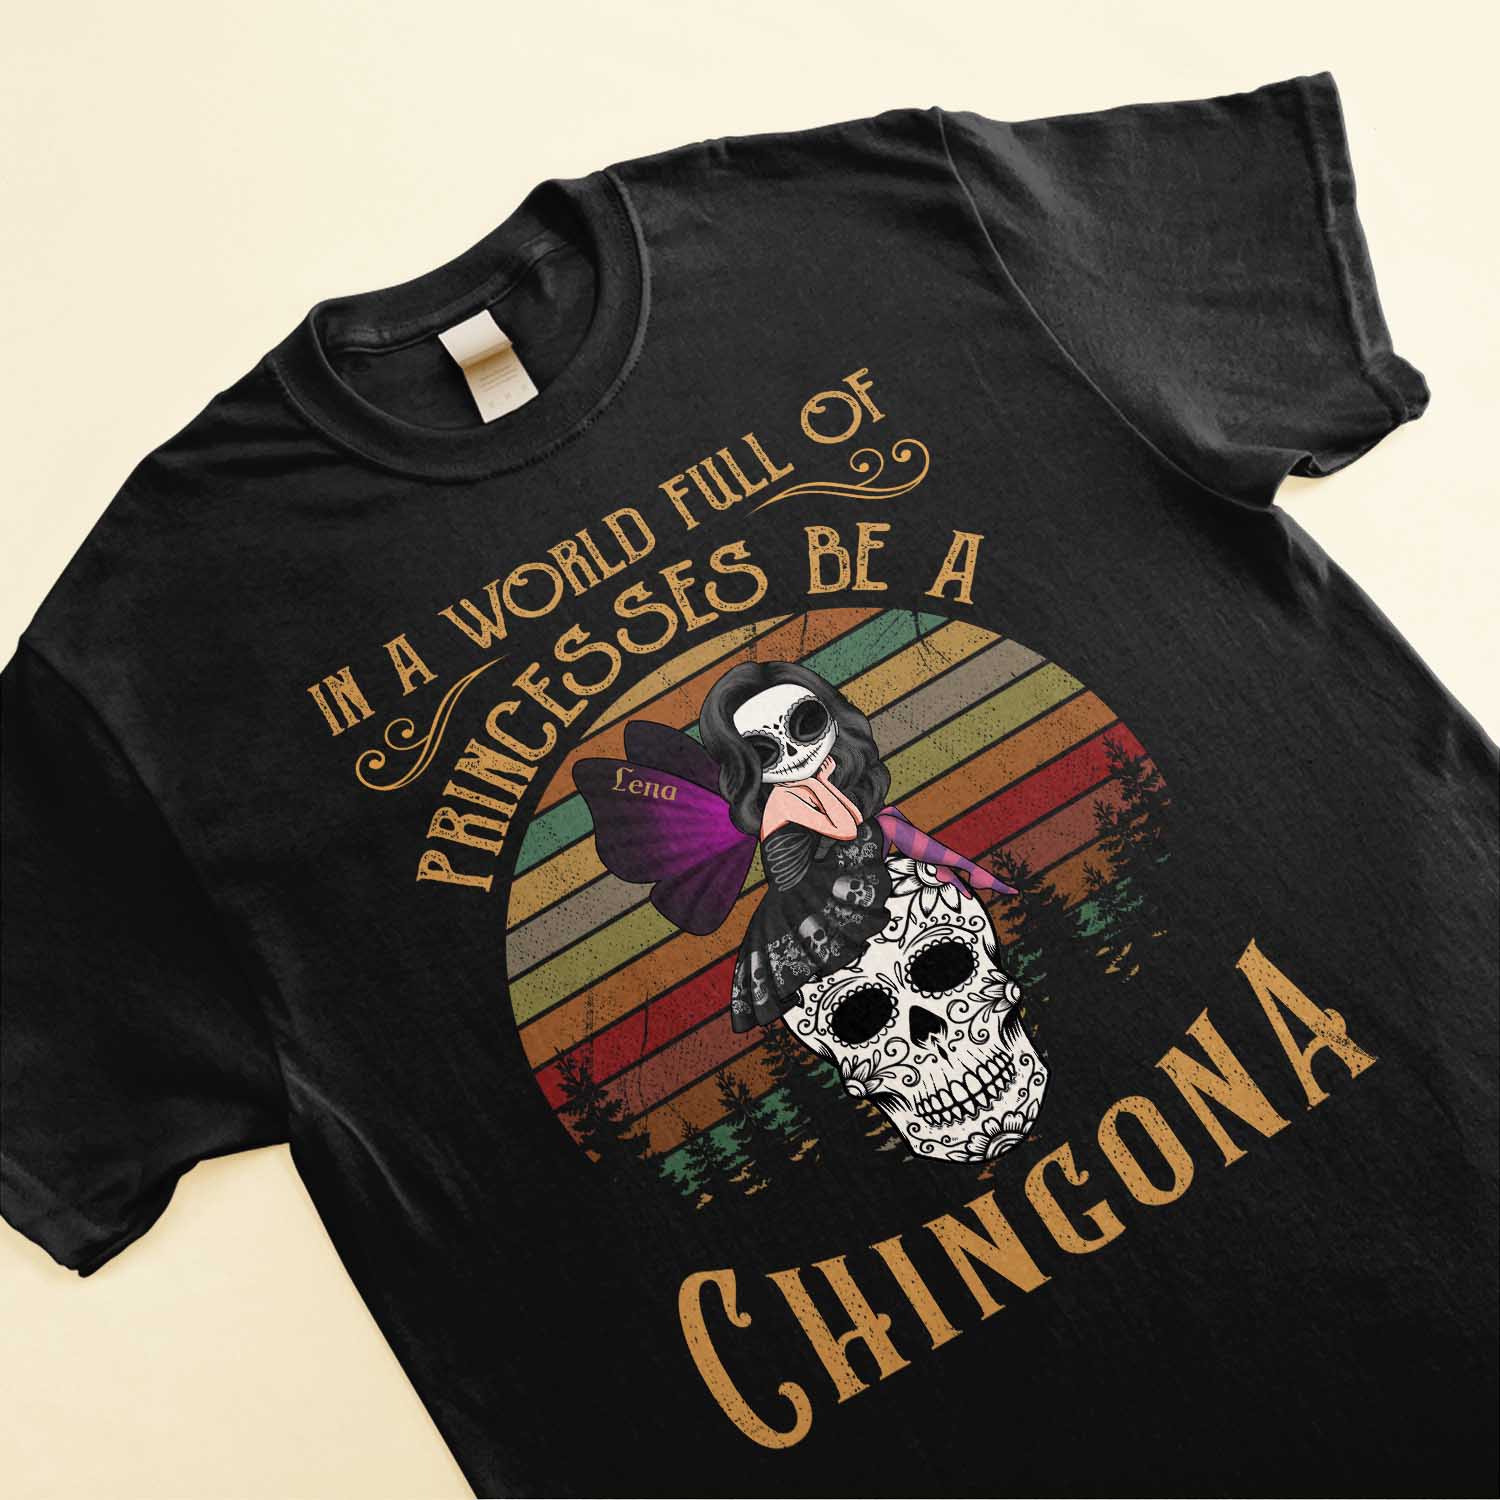 In A World Full Of Princesses Be A Chingona - Personalized Shirt - Hispanic Heritage Month Gift For Hispanics, Latino